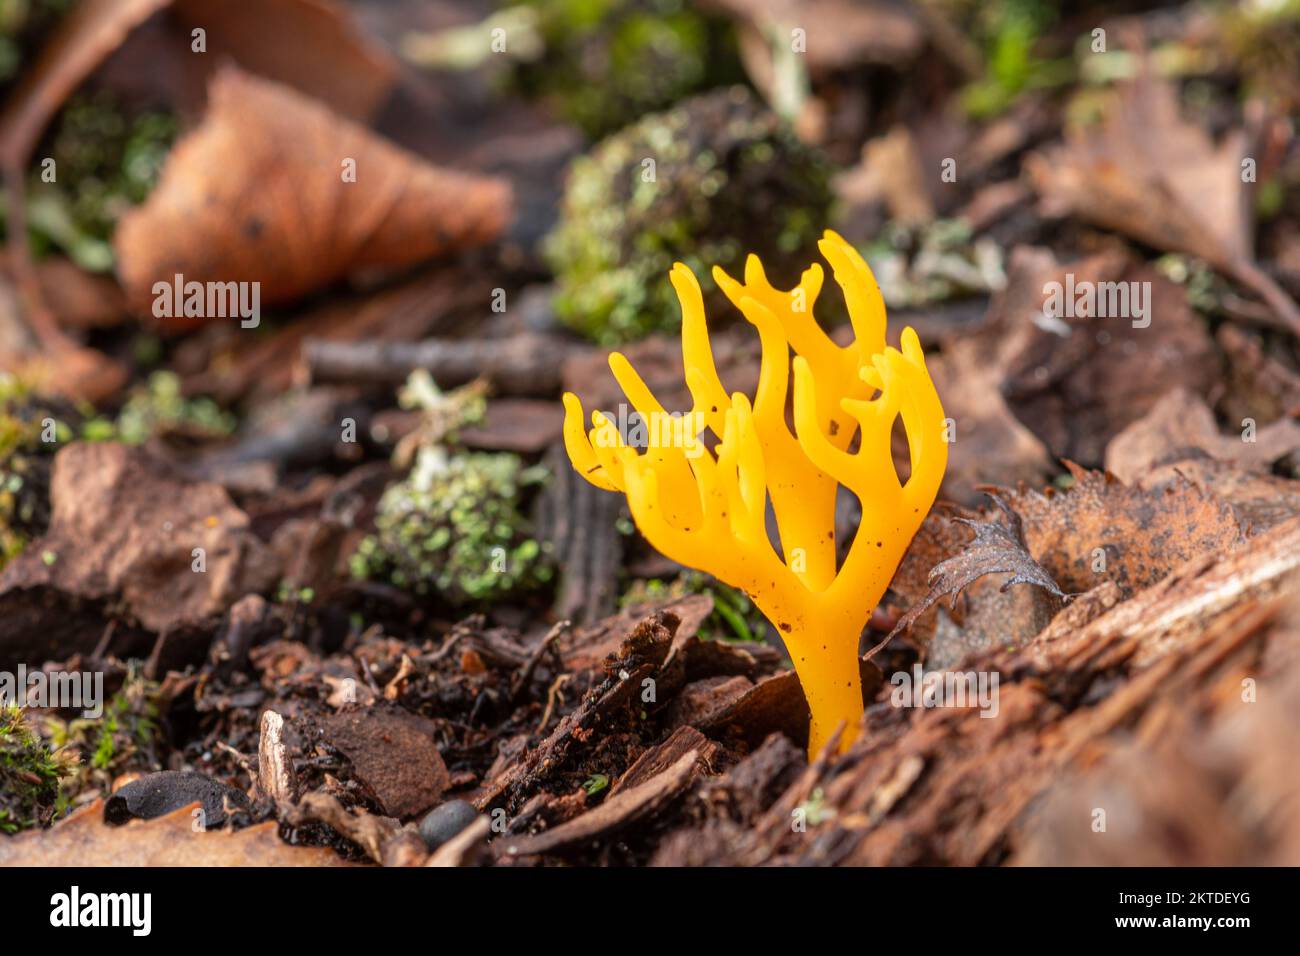 Yellow stagshorn fungi (Calocera viscosa), England, UK, during November or autumn Stock Photo